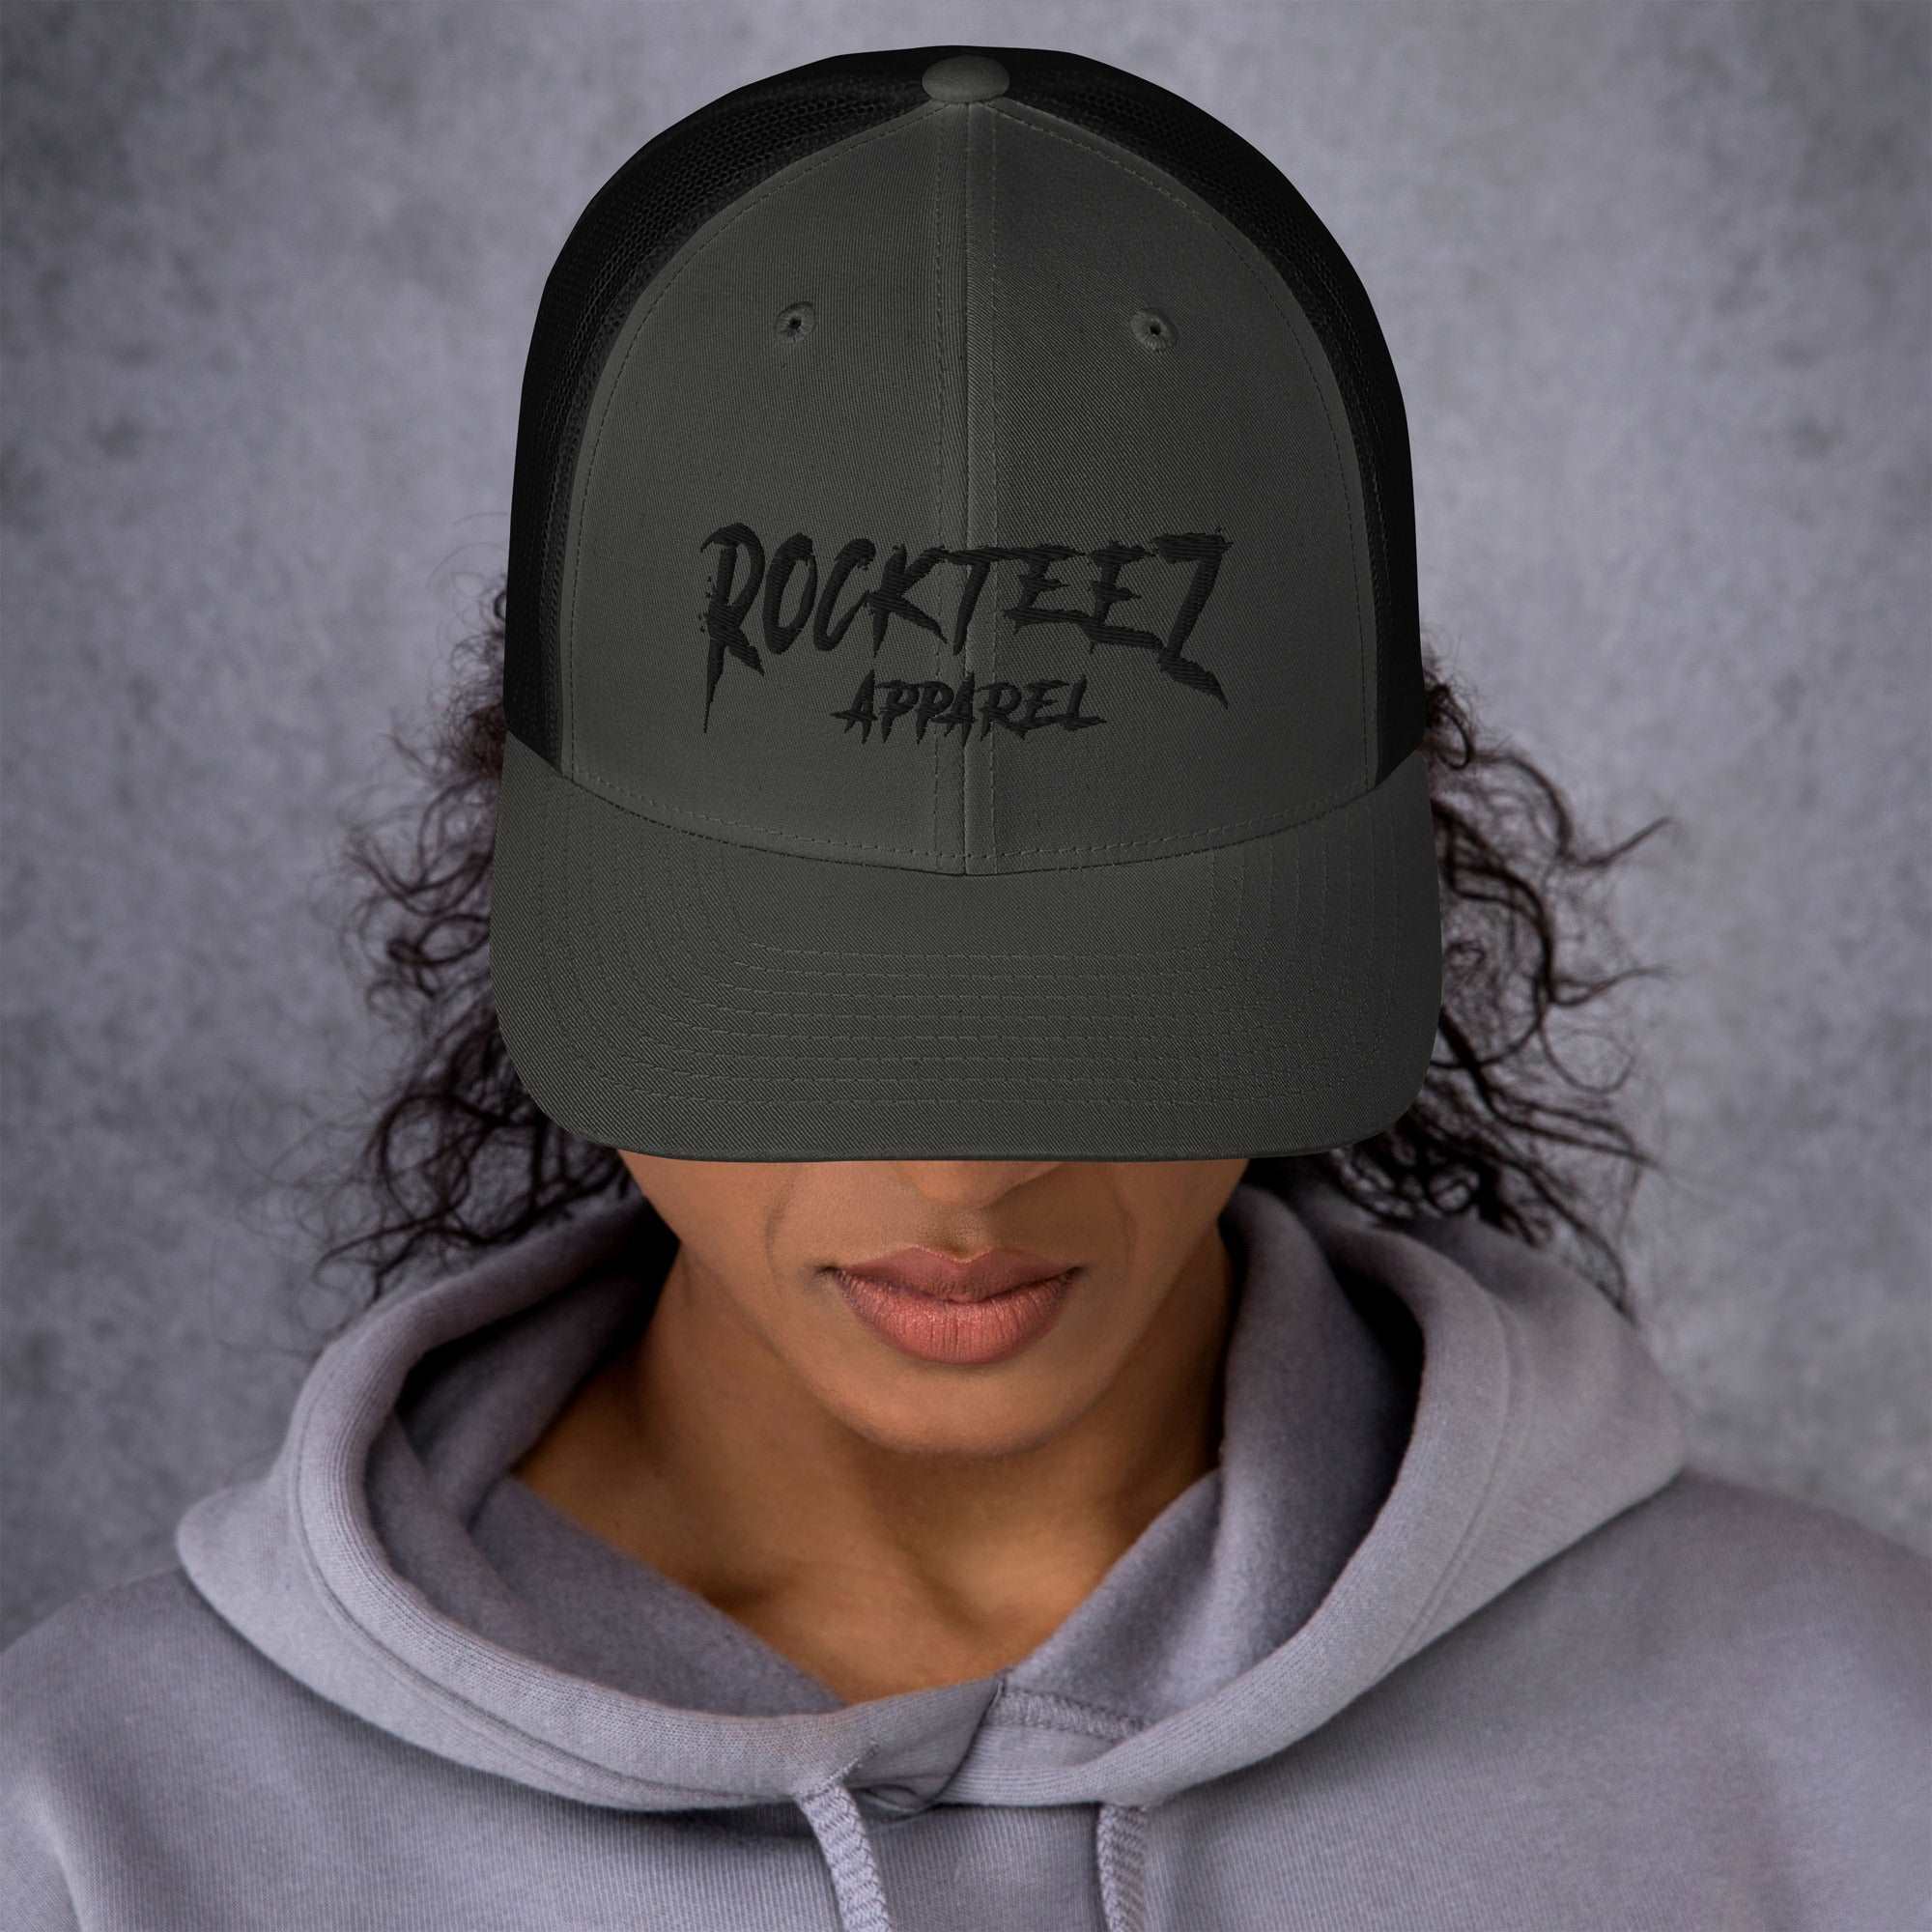 Rockteez Apparel Black Out Trucker Cap